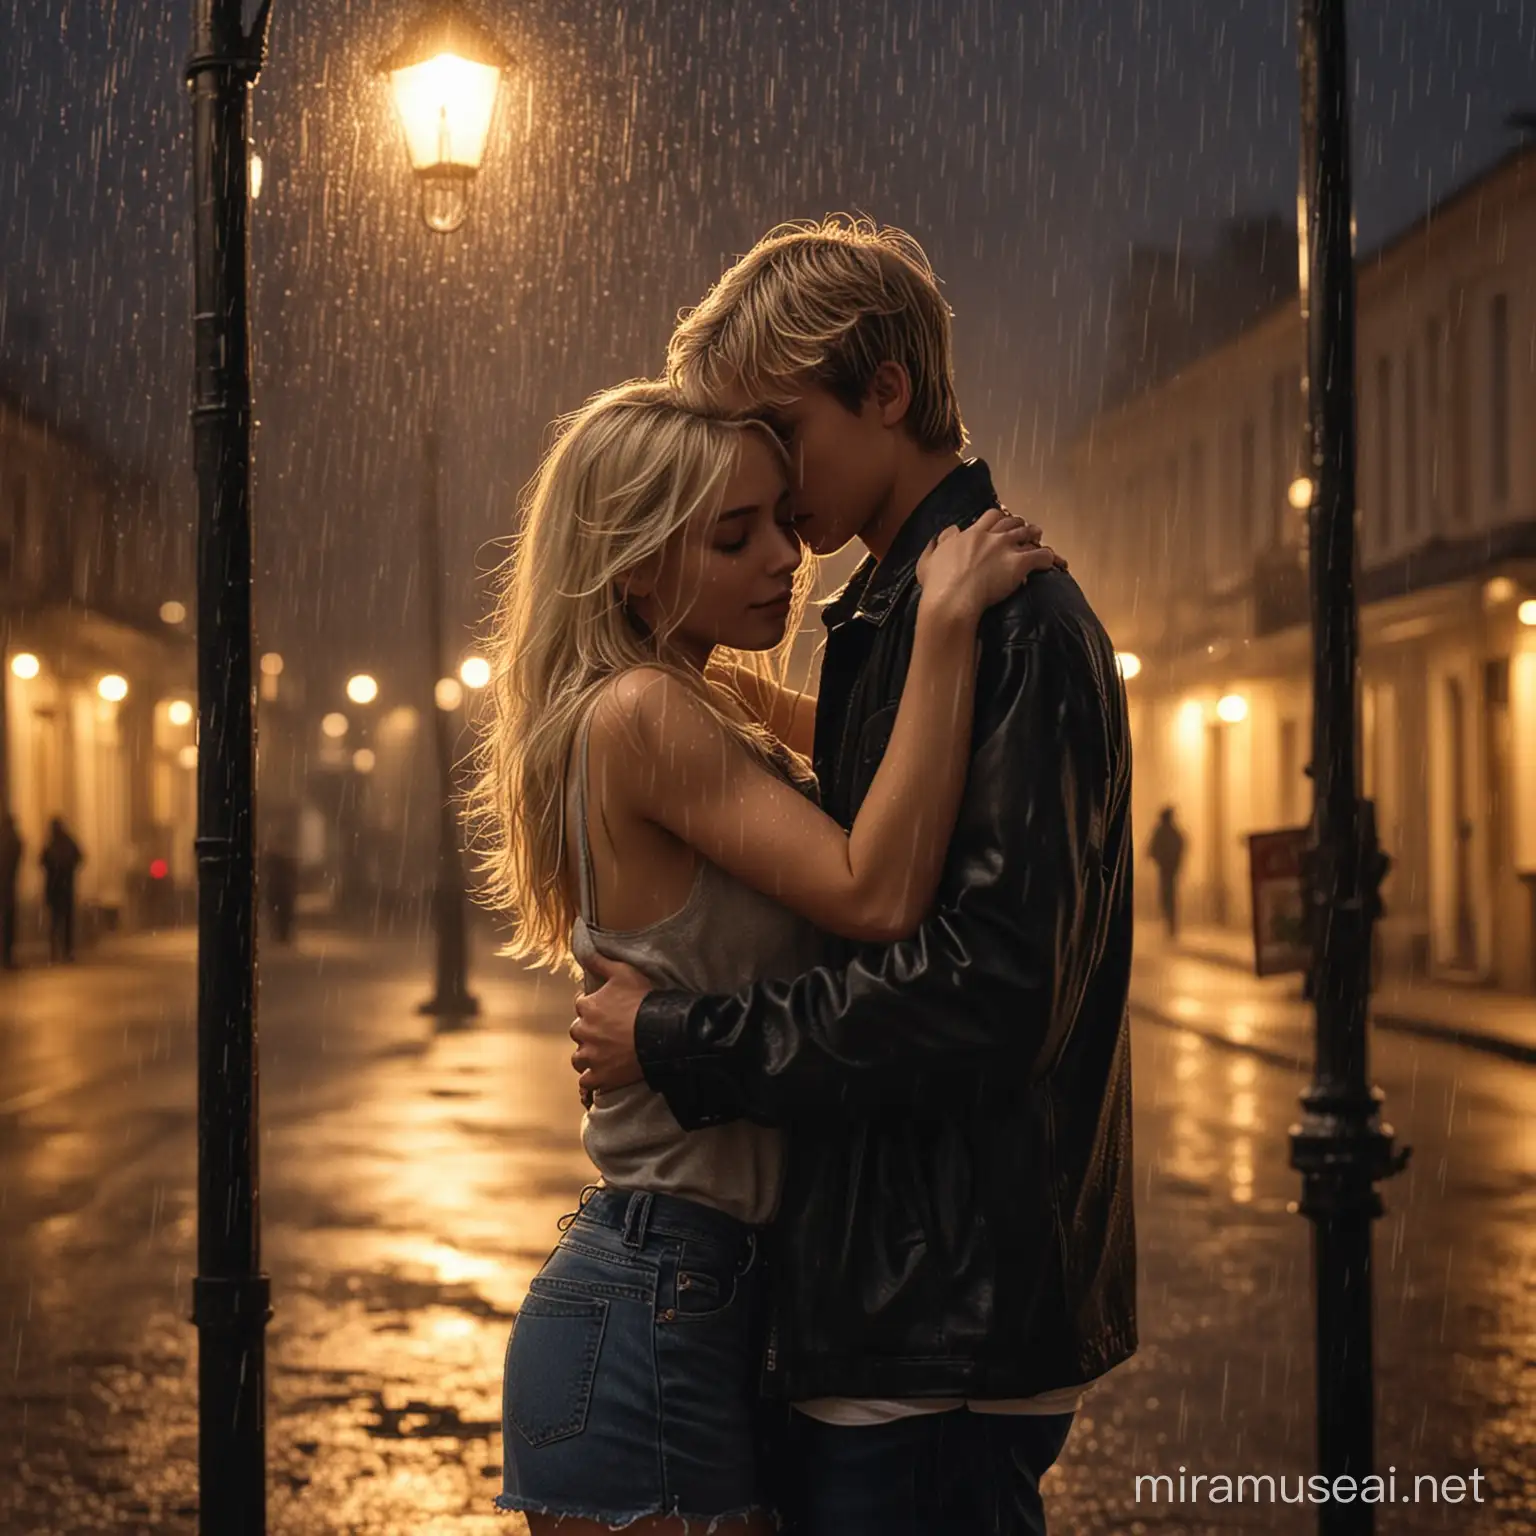 Romantic Embrace of Beautiful Couple in Evening Rain under Dim Street Lamp Light